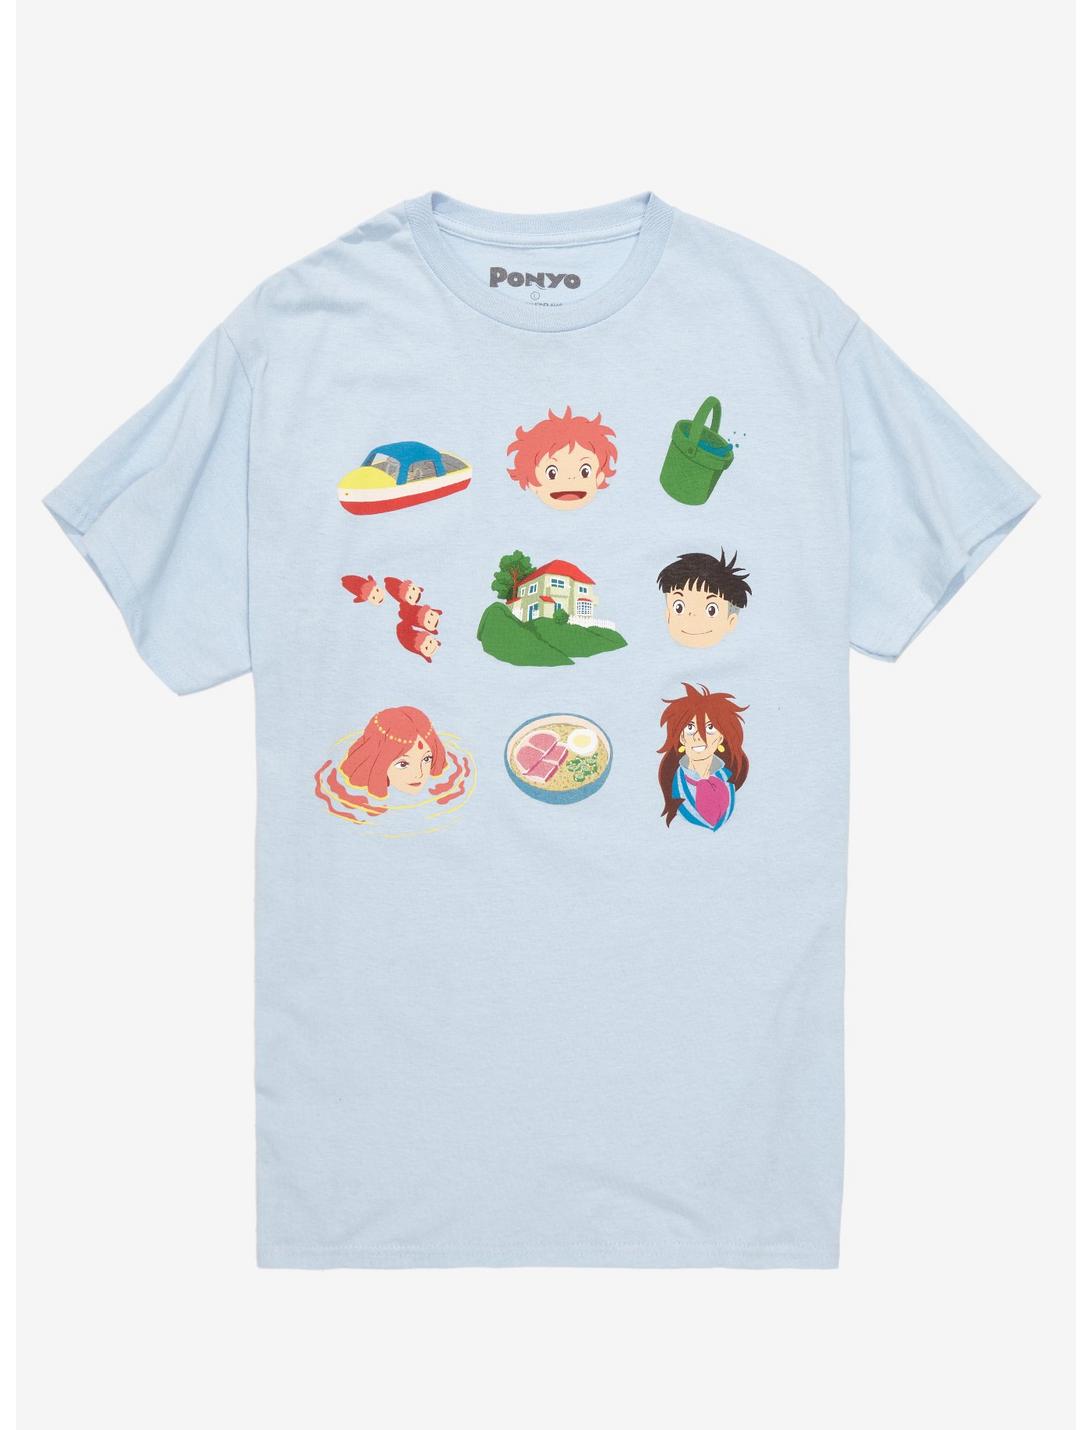 Studio Ghibli Ponyo Grid Boyfriend Fit Girls T-Shirt, MULTI, hi-res